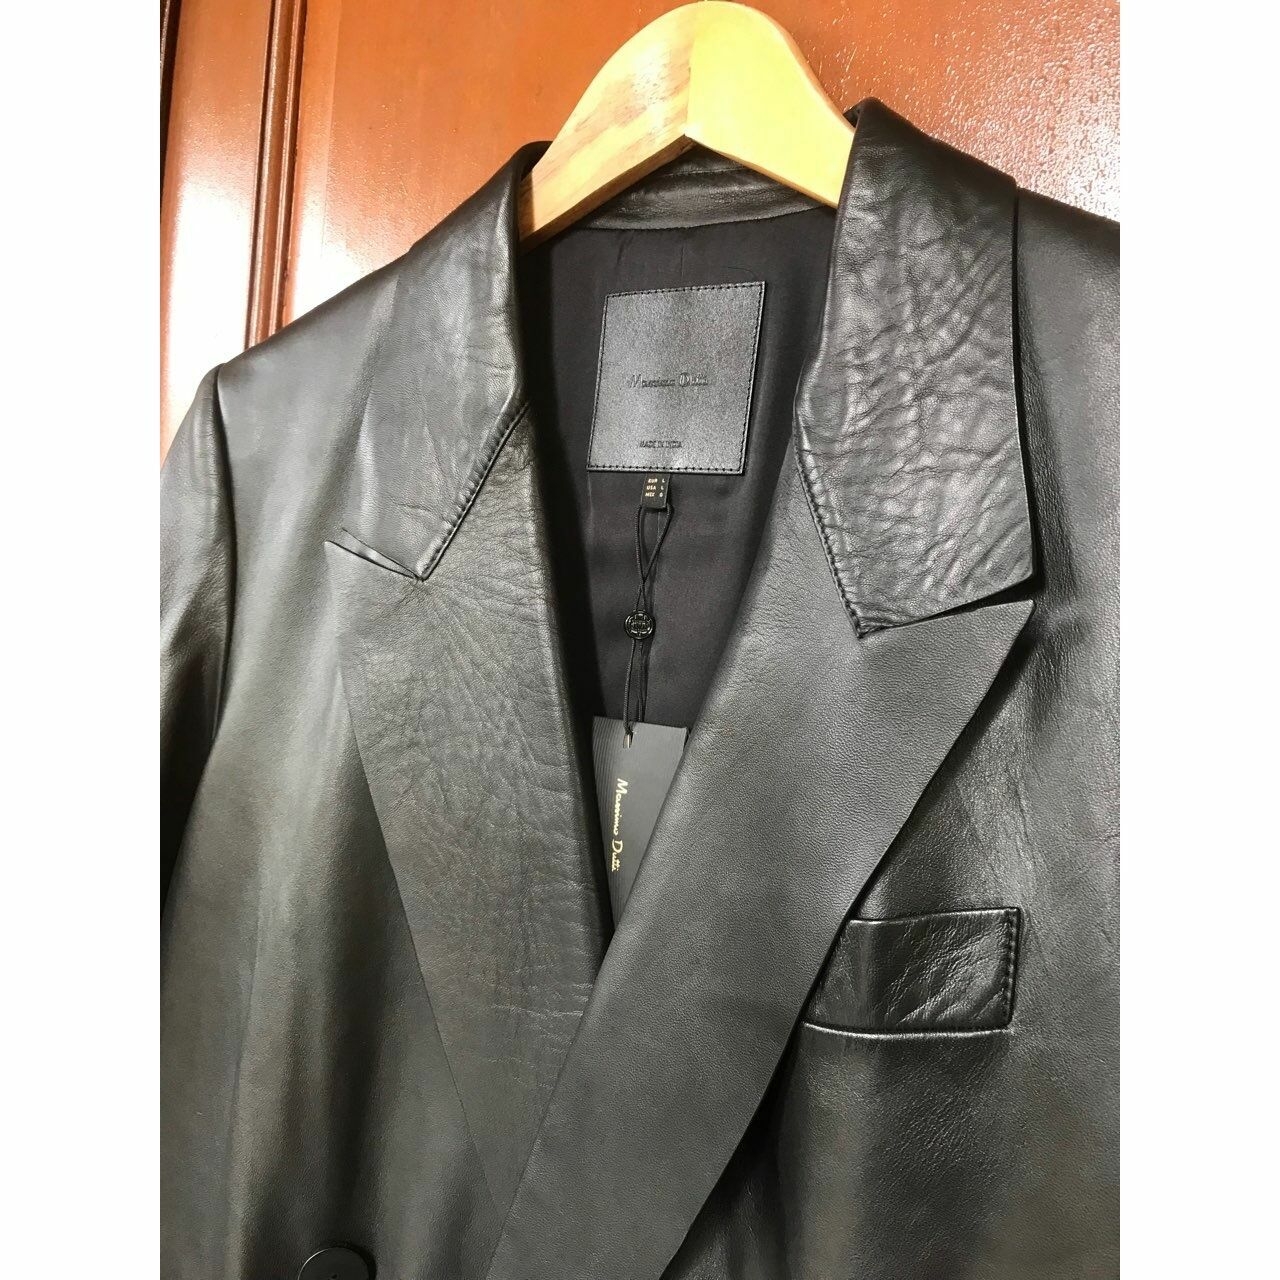 Massimo Dutti Double Breasted Nappa Leather Jacket